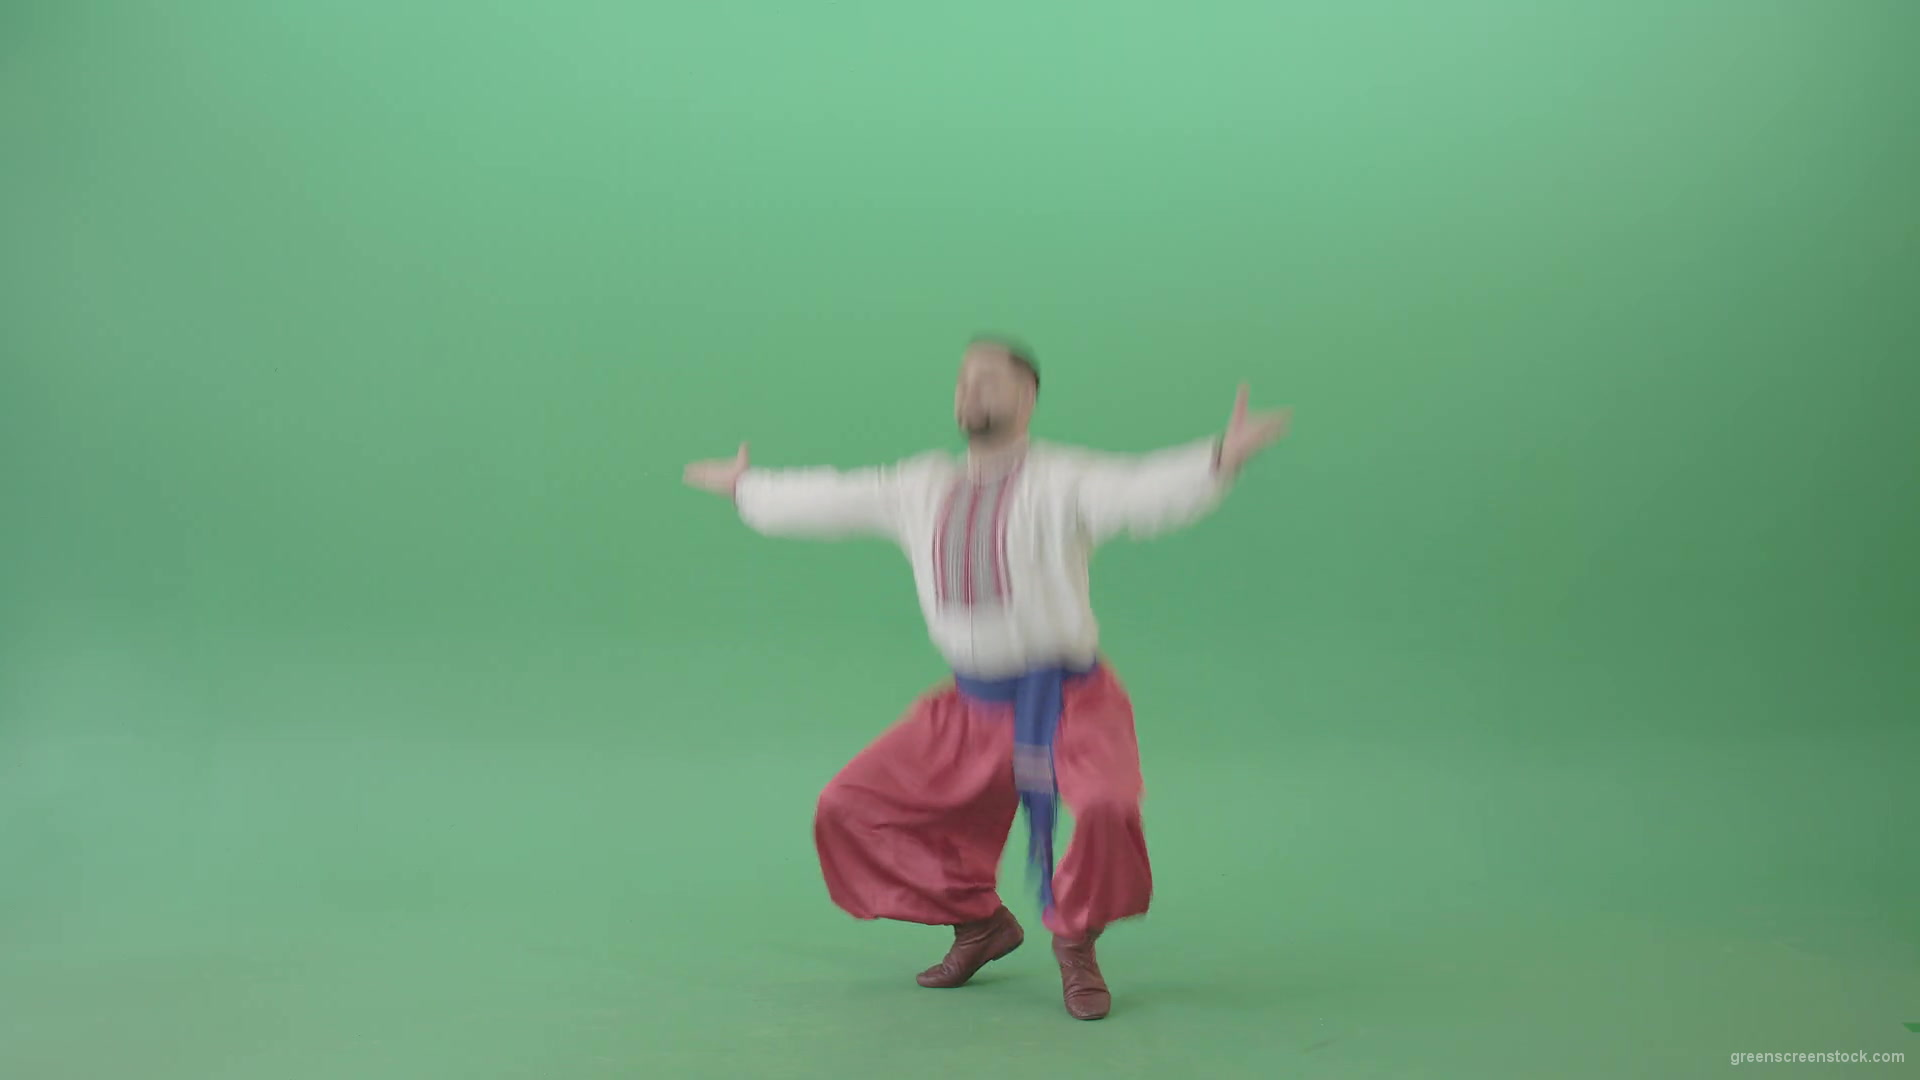 Cossack-Dance-Hopak-by-Ukrainian-Man-isolated-on-Green-Screen-4K-Video-Footage-1920_002 Green Screen Stock